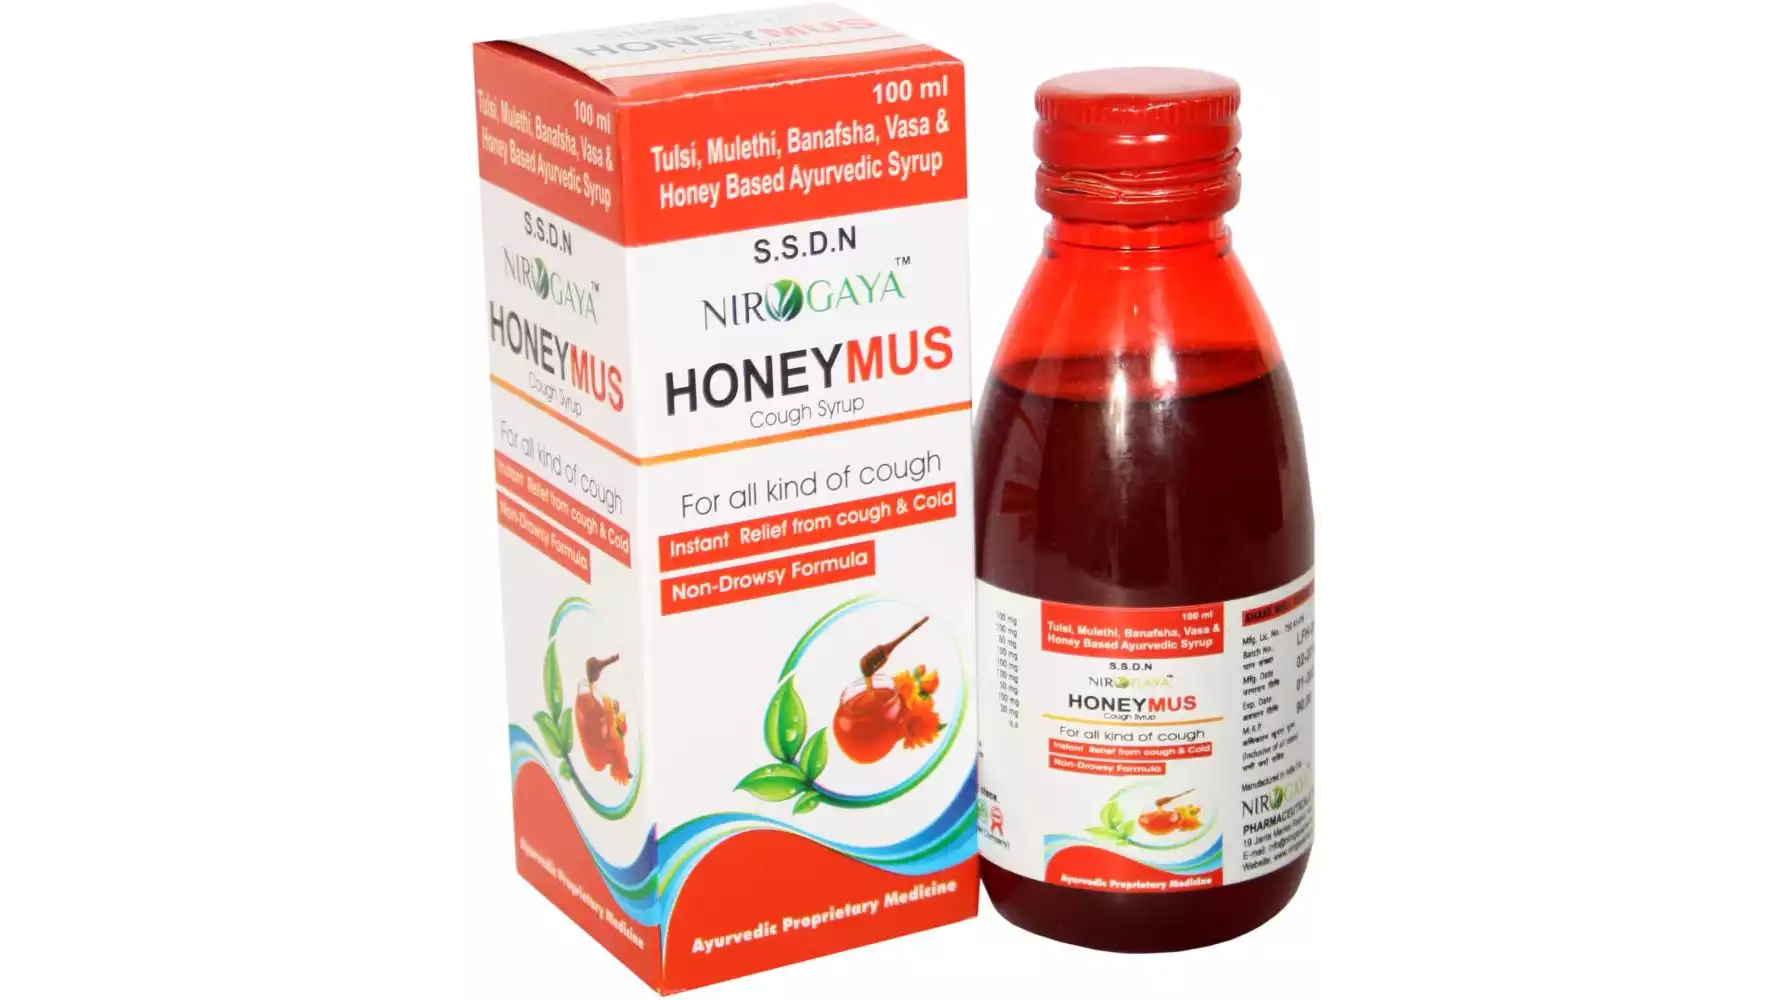 Nirogaya Honeymus Cough Syrup (100ml)